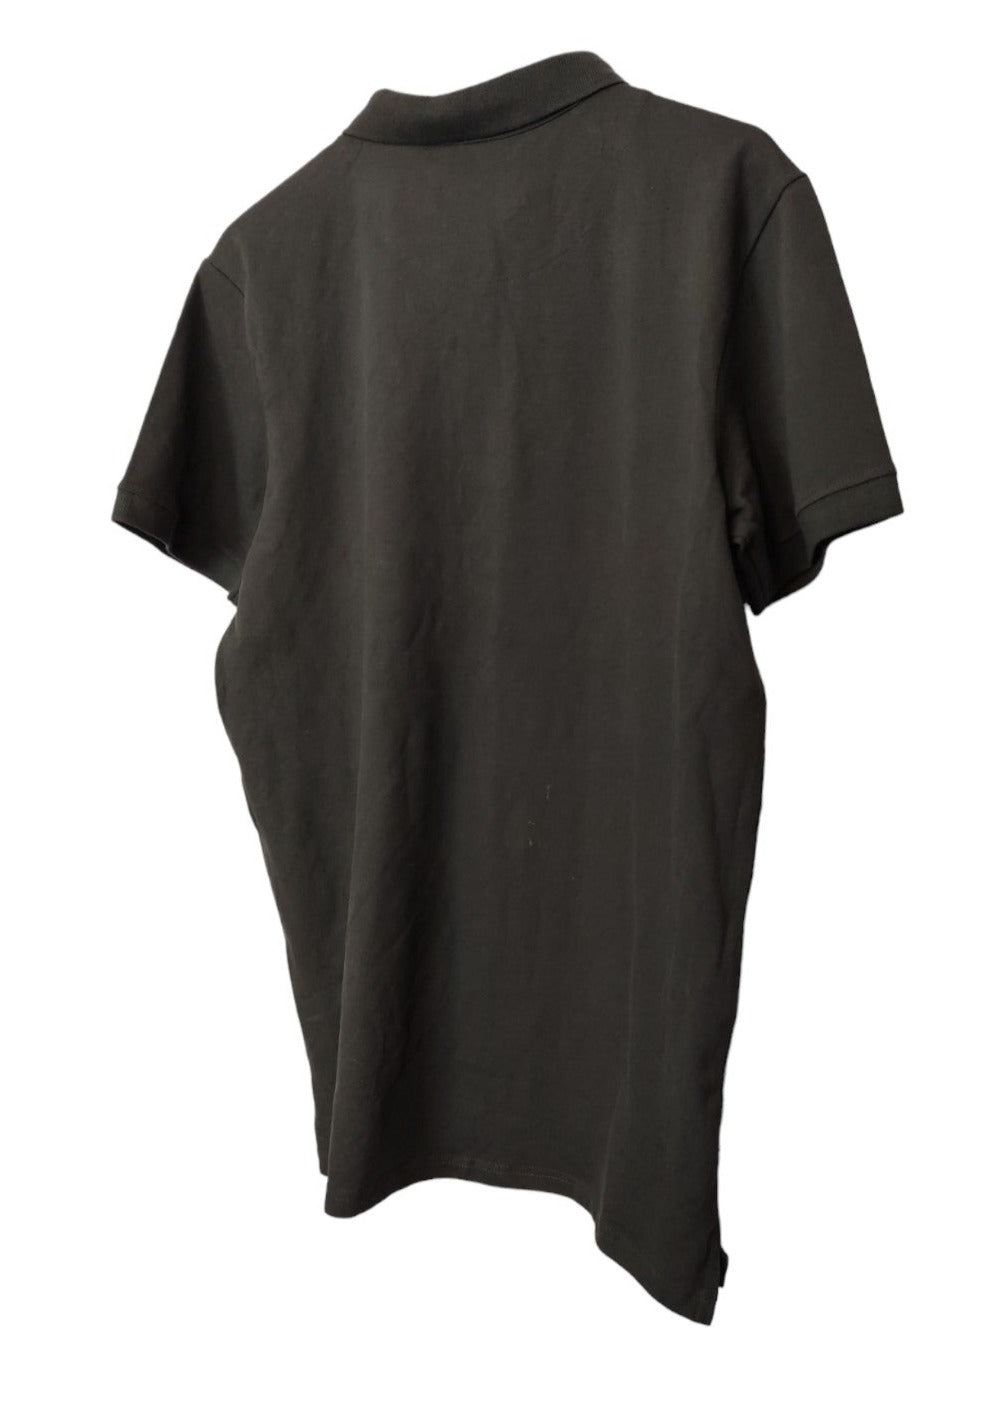 Stock, Ανδρική Μπλούζα - T-Shirt FIRETRAP σε Χακί-Γκρι χρώμα  (Medium)